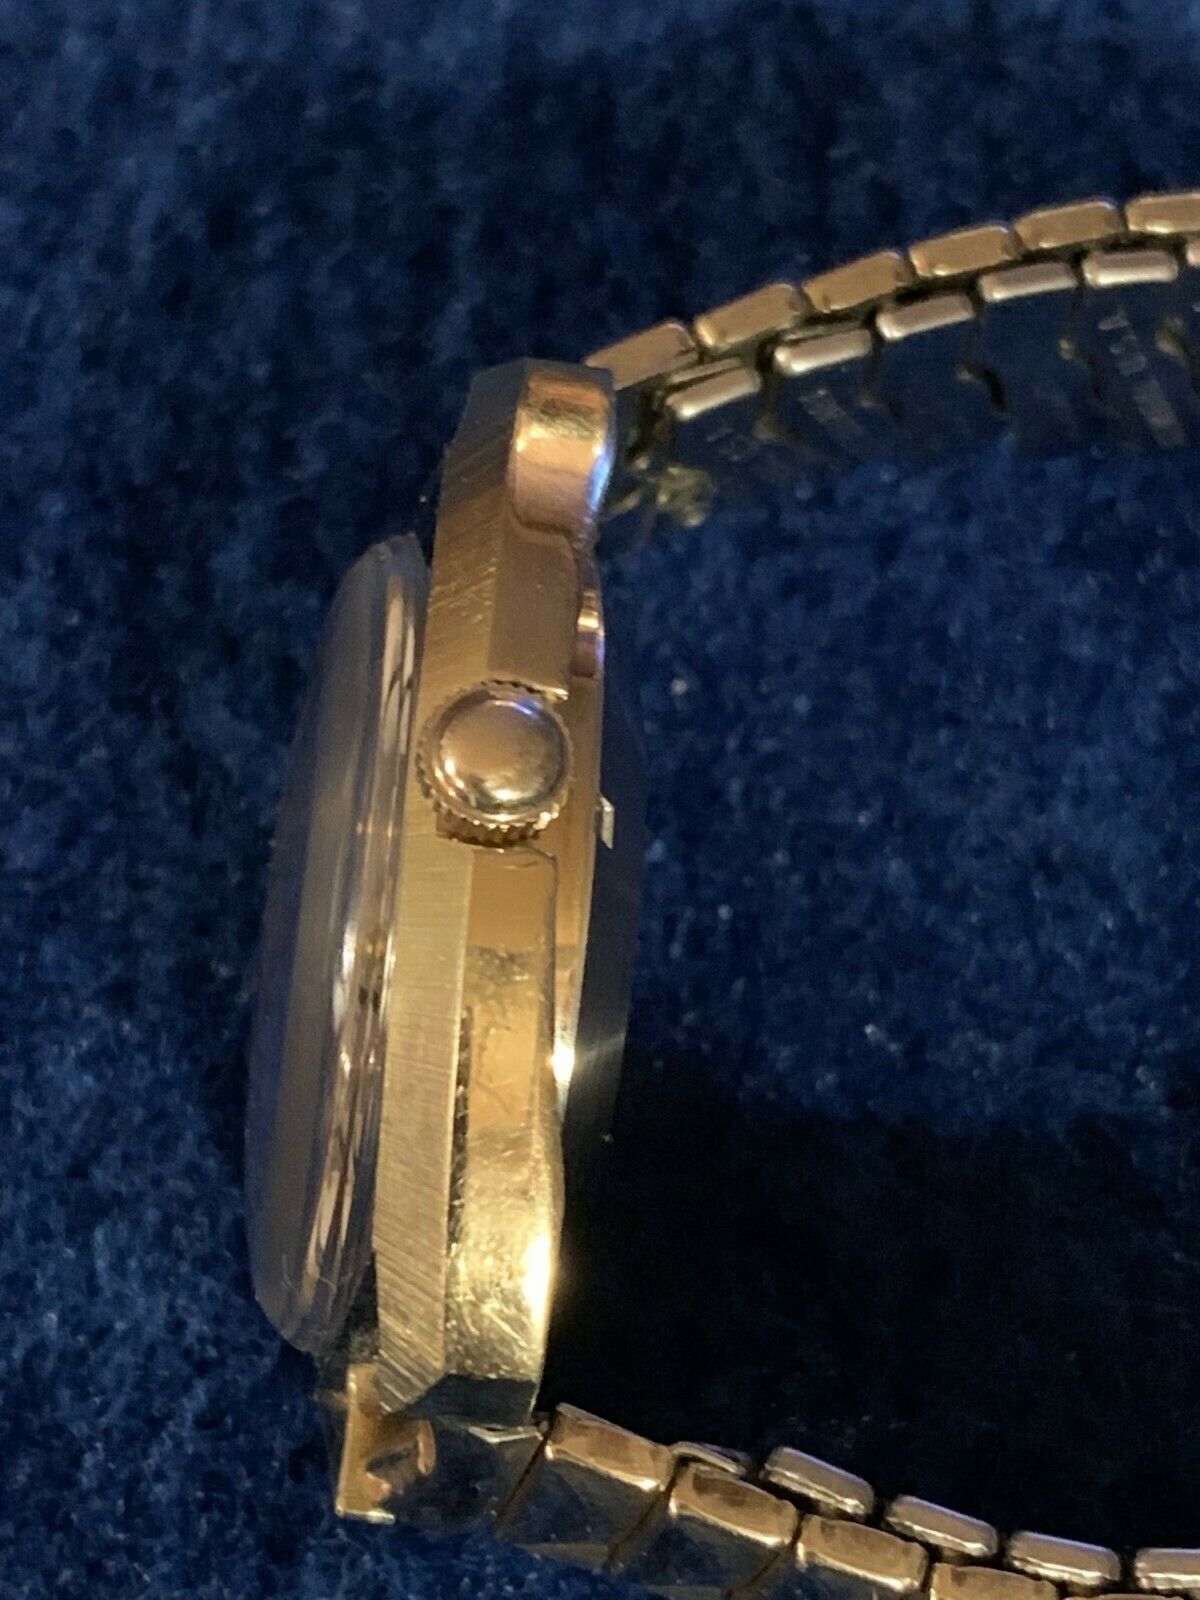 Vintage Hamilton 25 (ONE Jewel ) Wrist Watch for parts. 海外 即決-